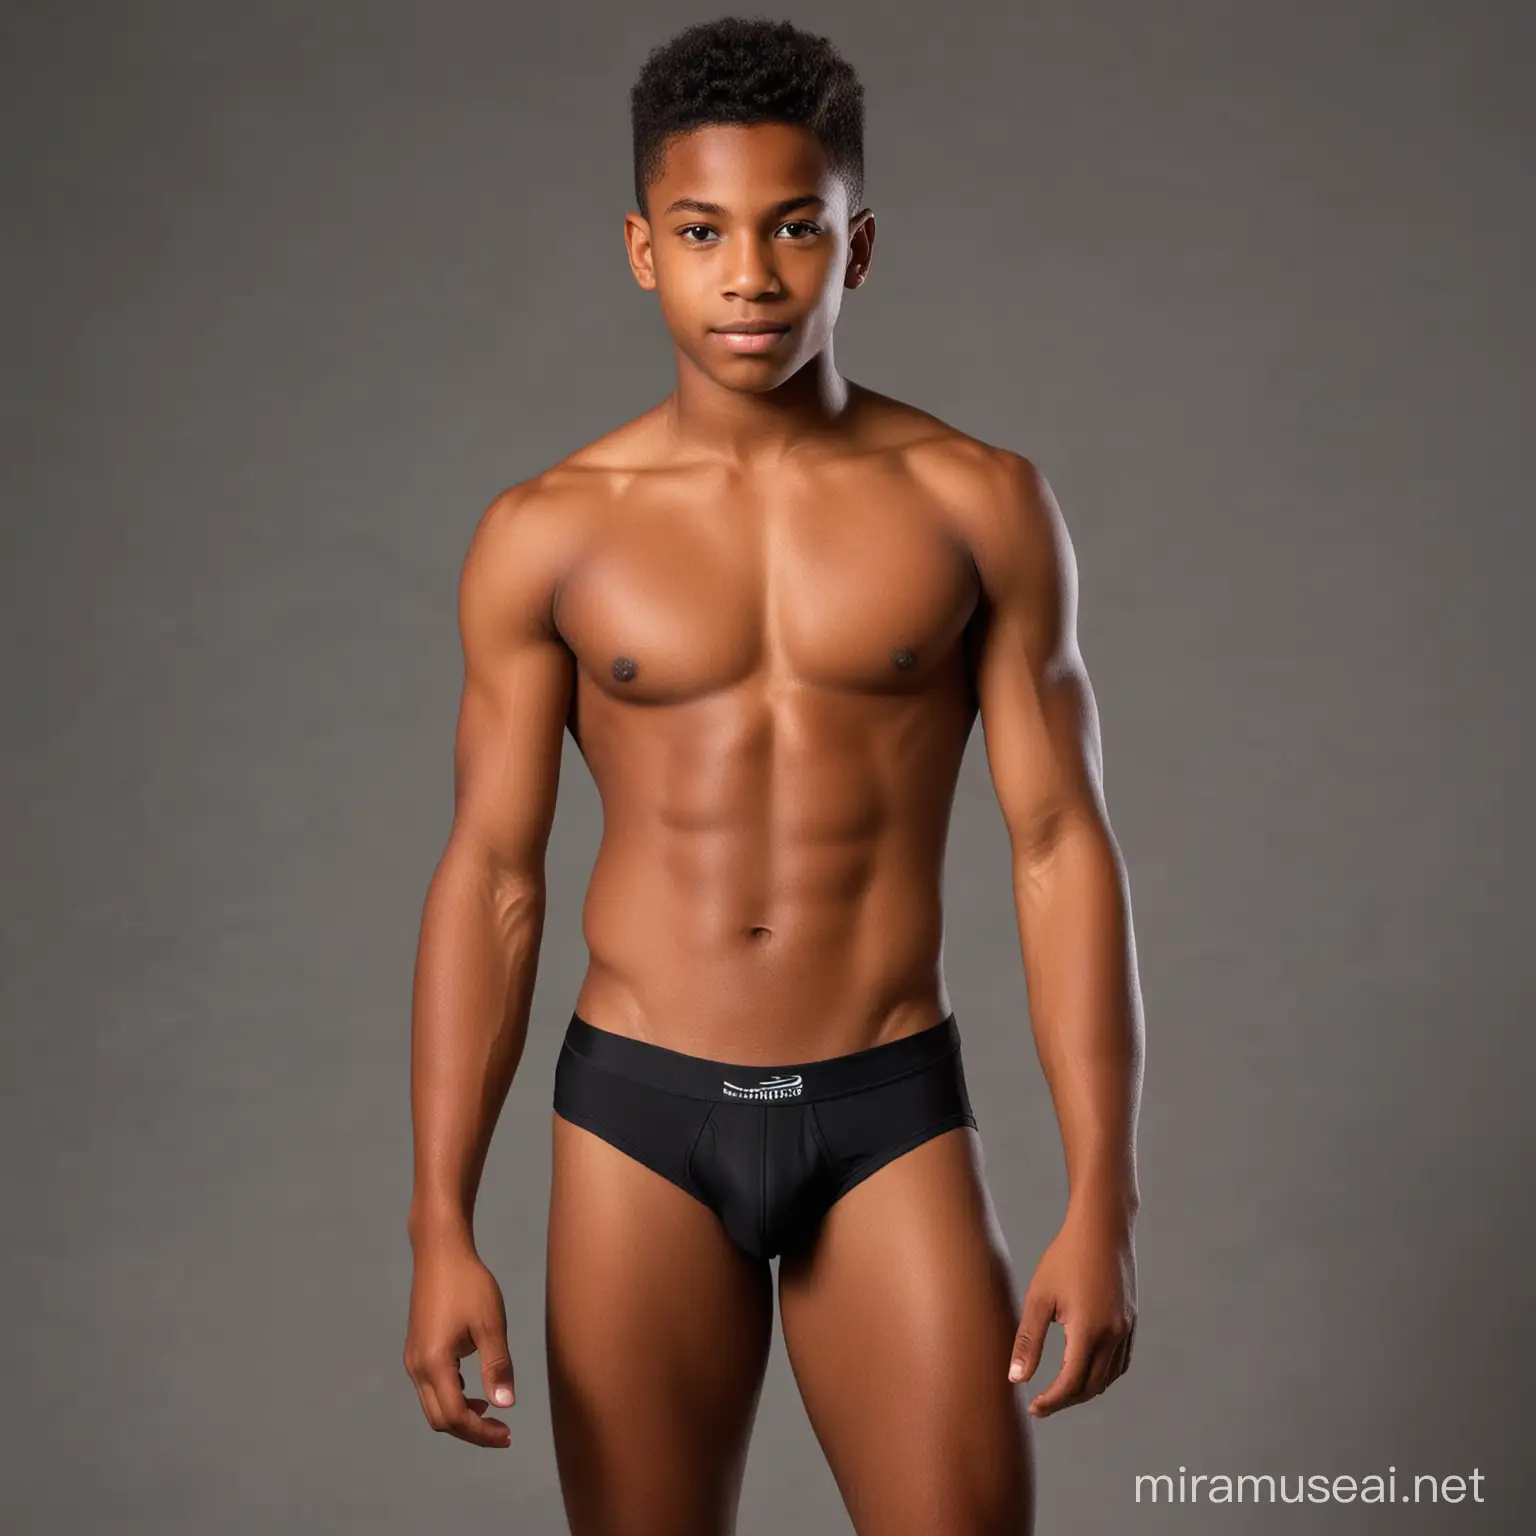 A very young black shirtless muscular teenage boy wearing underware